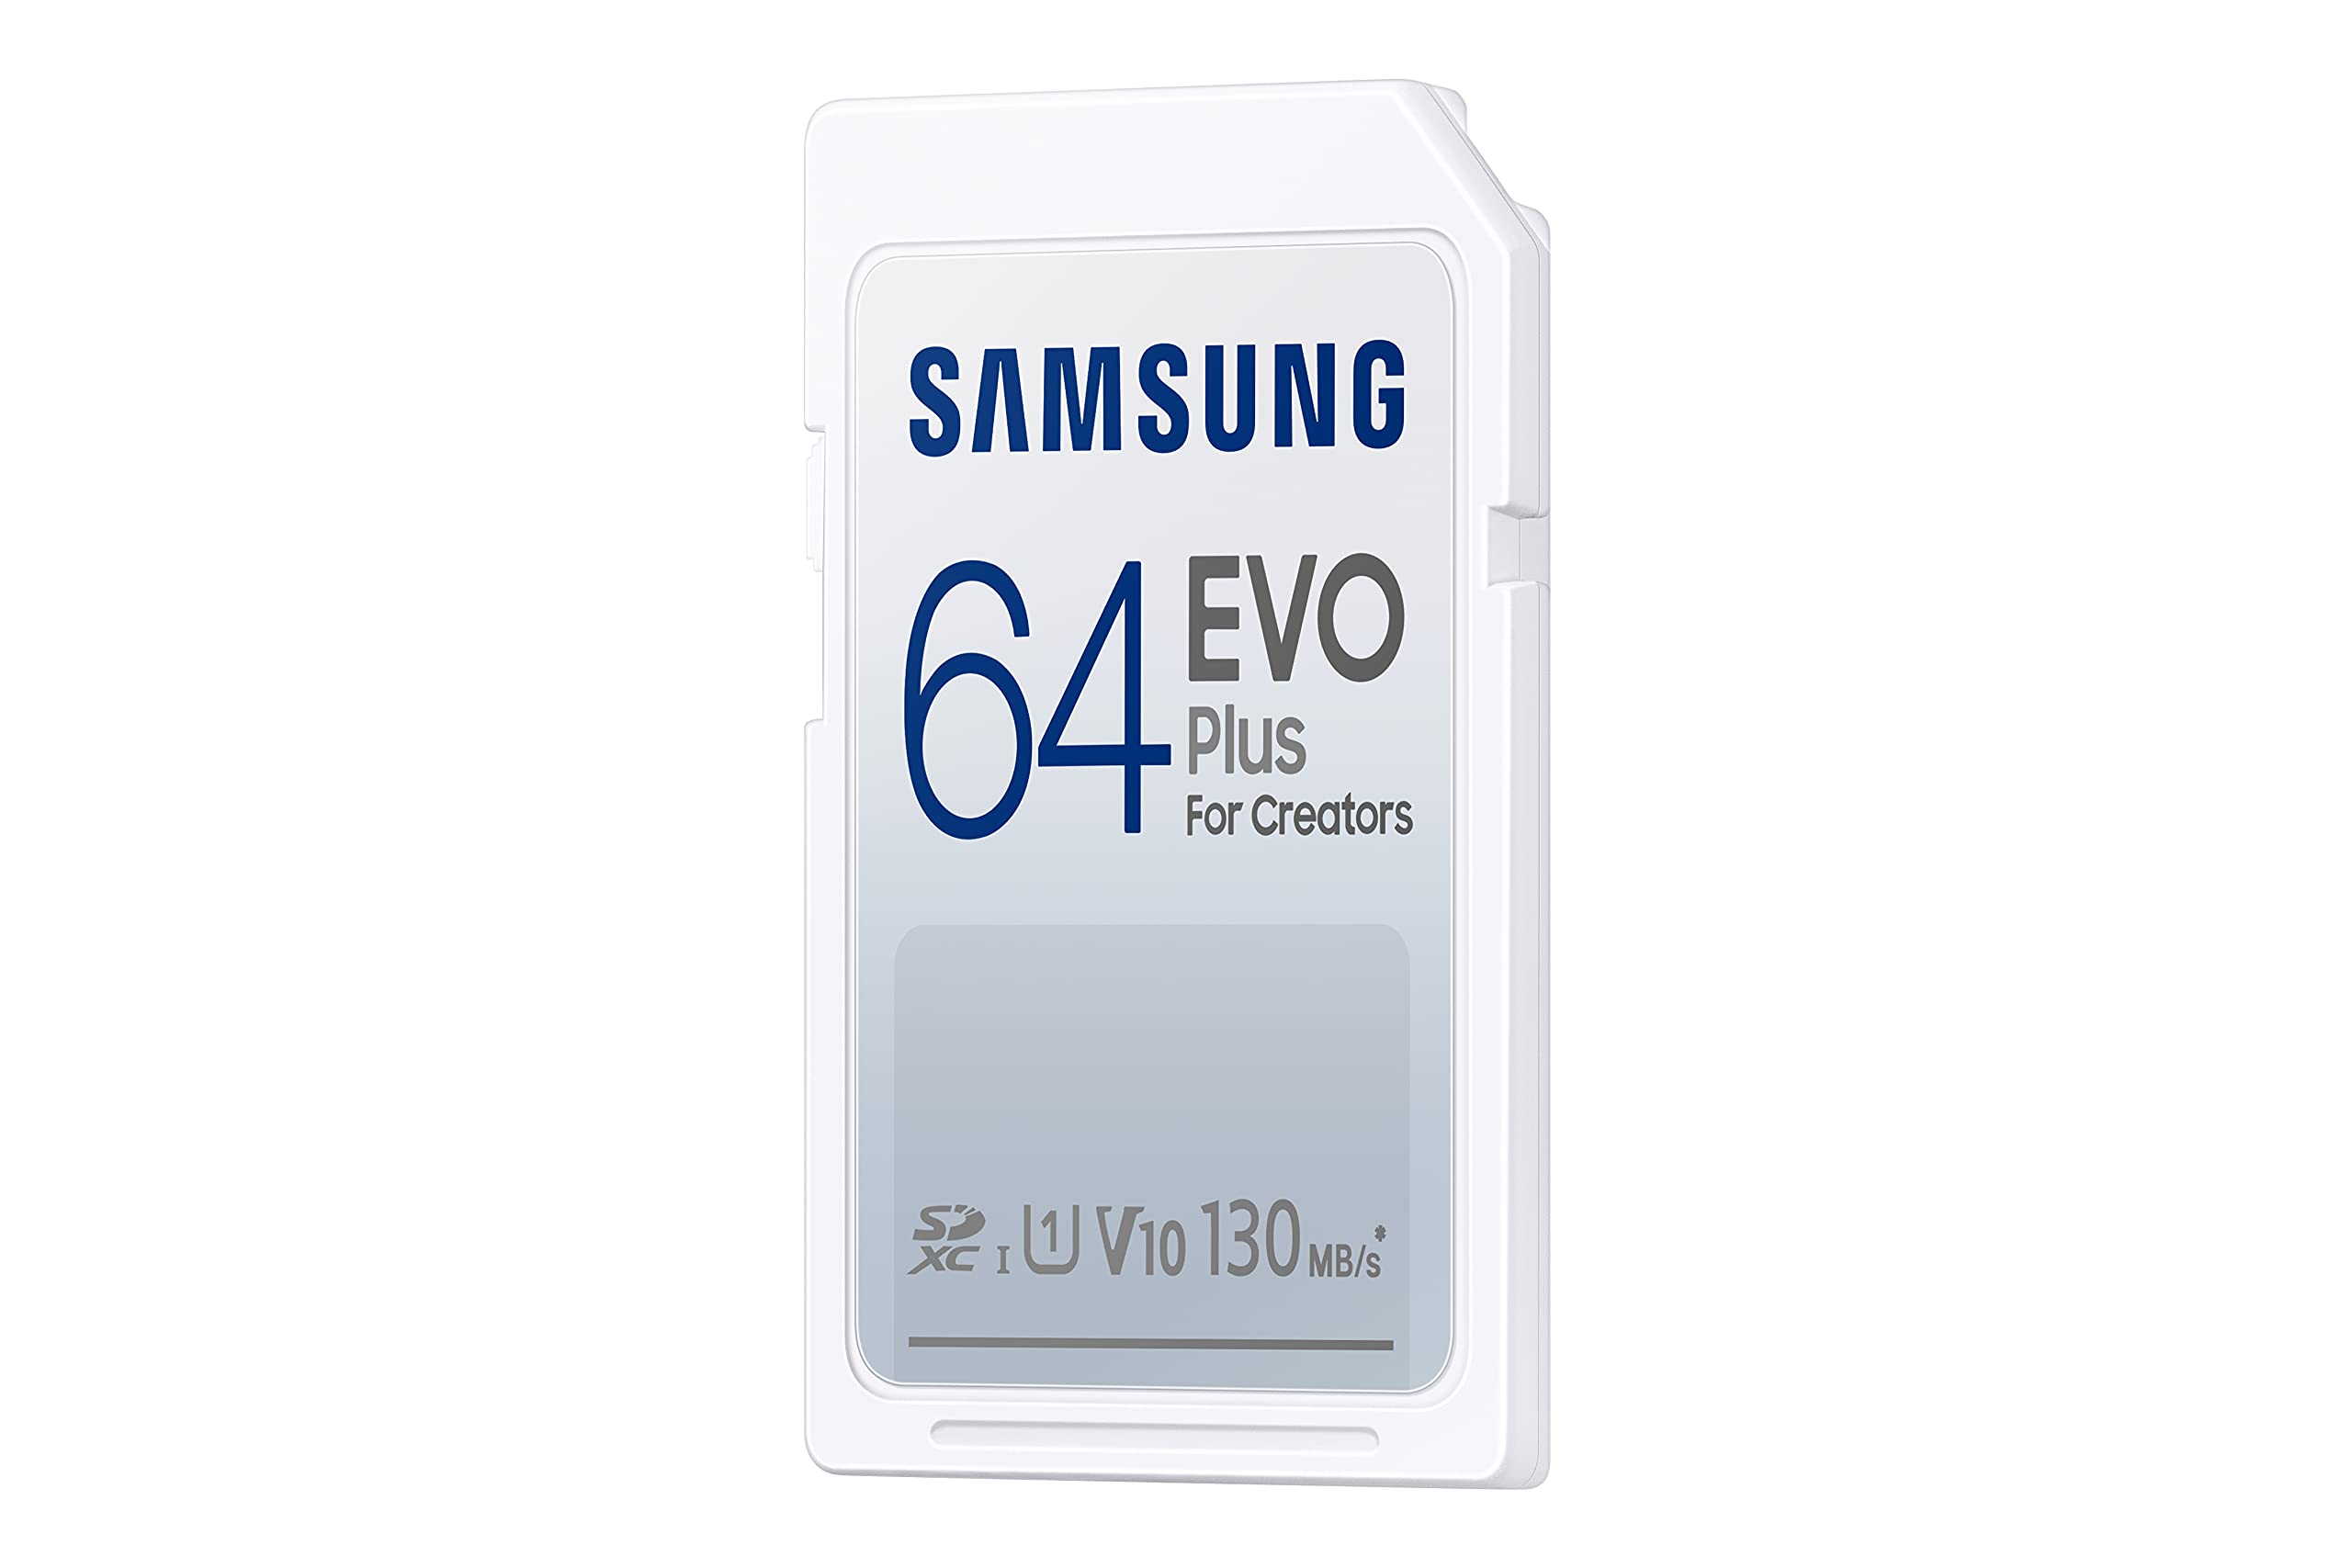 SAMSUNG EVO Plus Full Size 64 GB SDXC Card 130MB/s Full HD & 4K UHD, UHS-I, U1, V10 (MB-SC64K/AM)